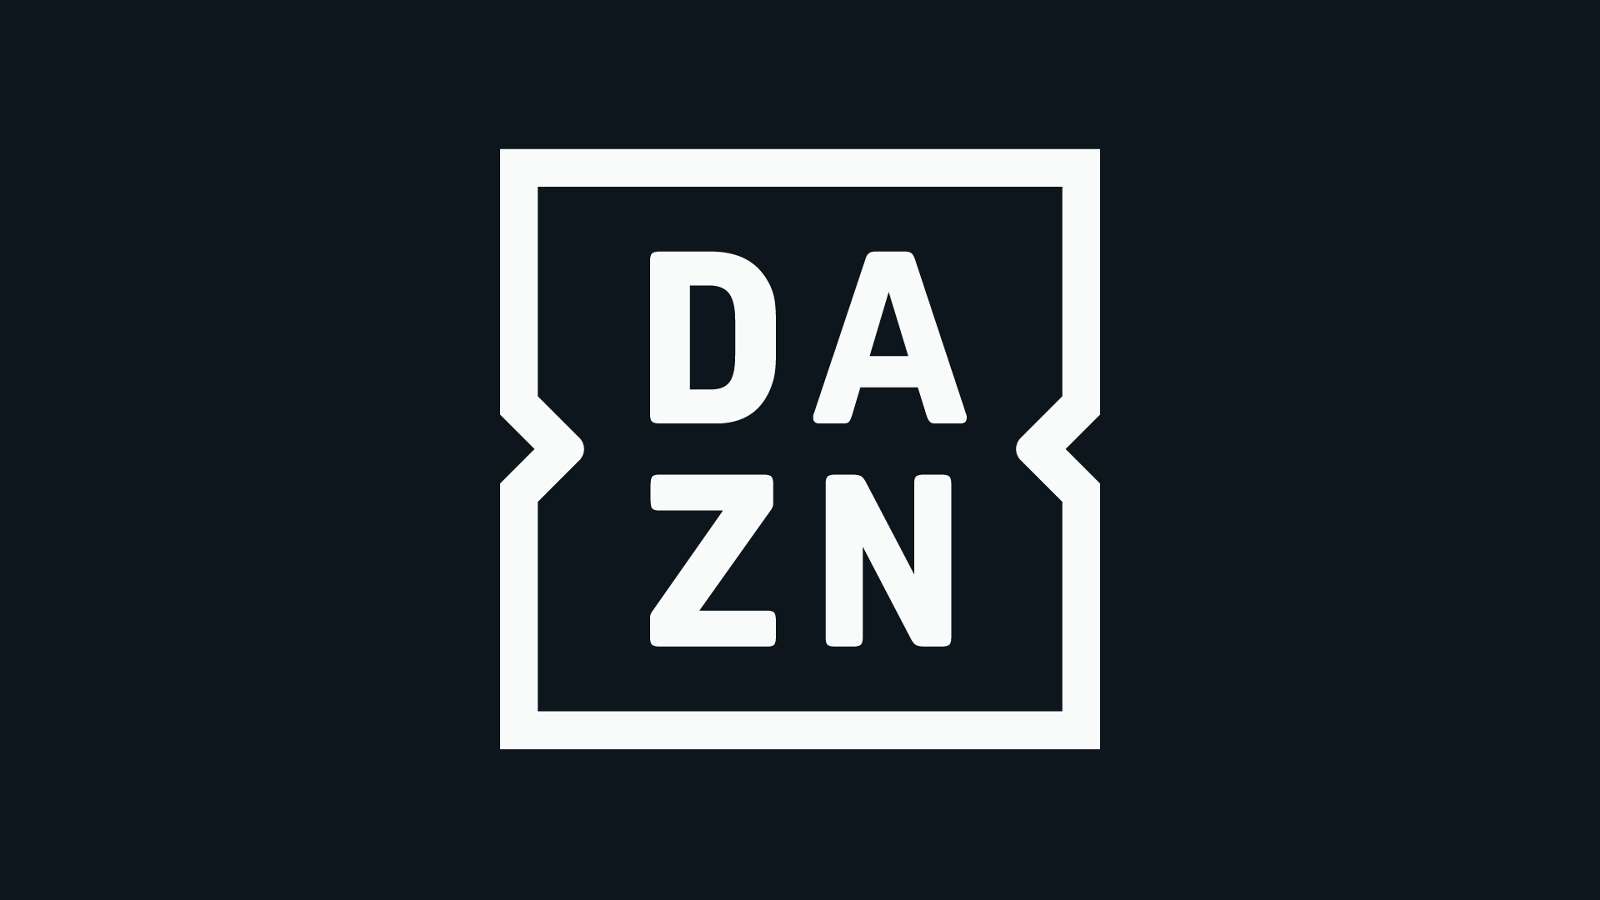 DAZNのロゴ